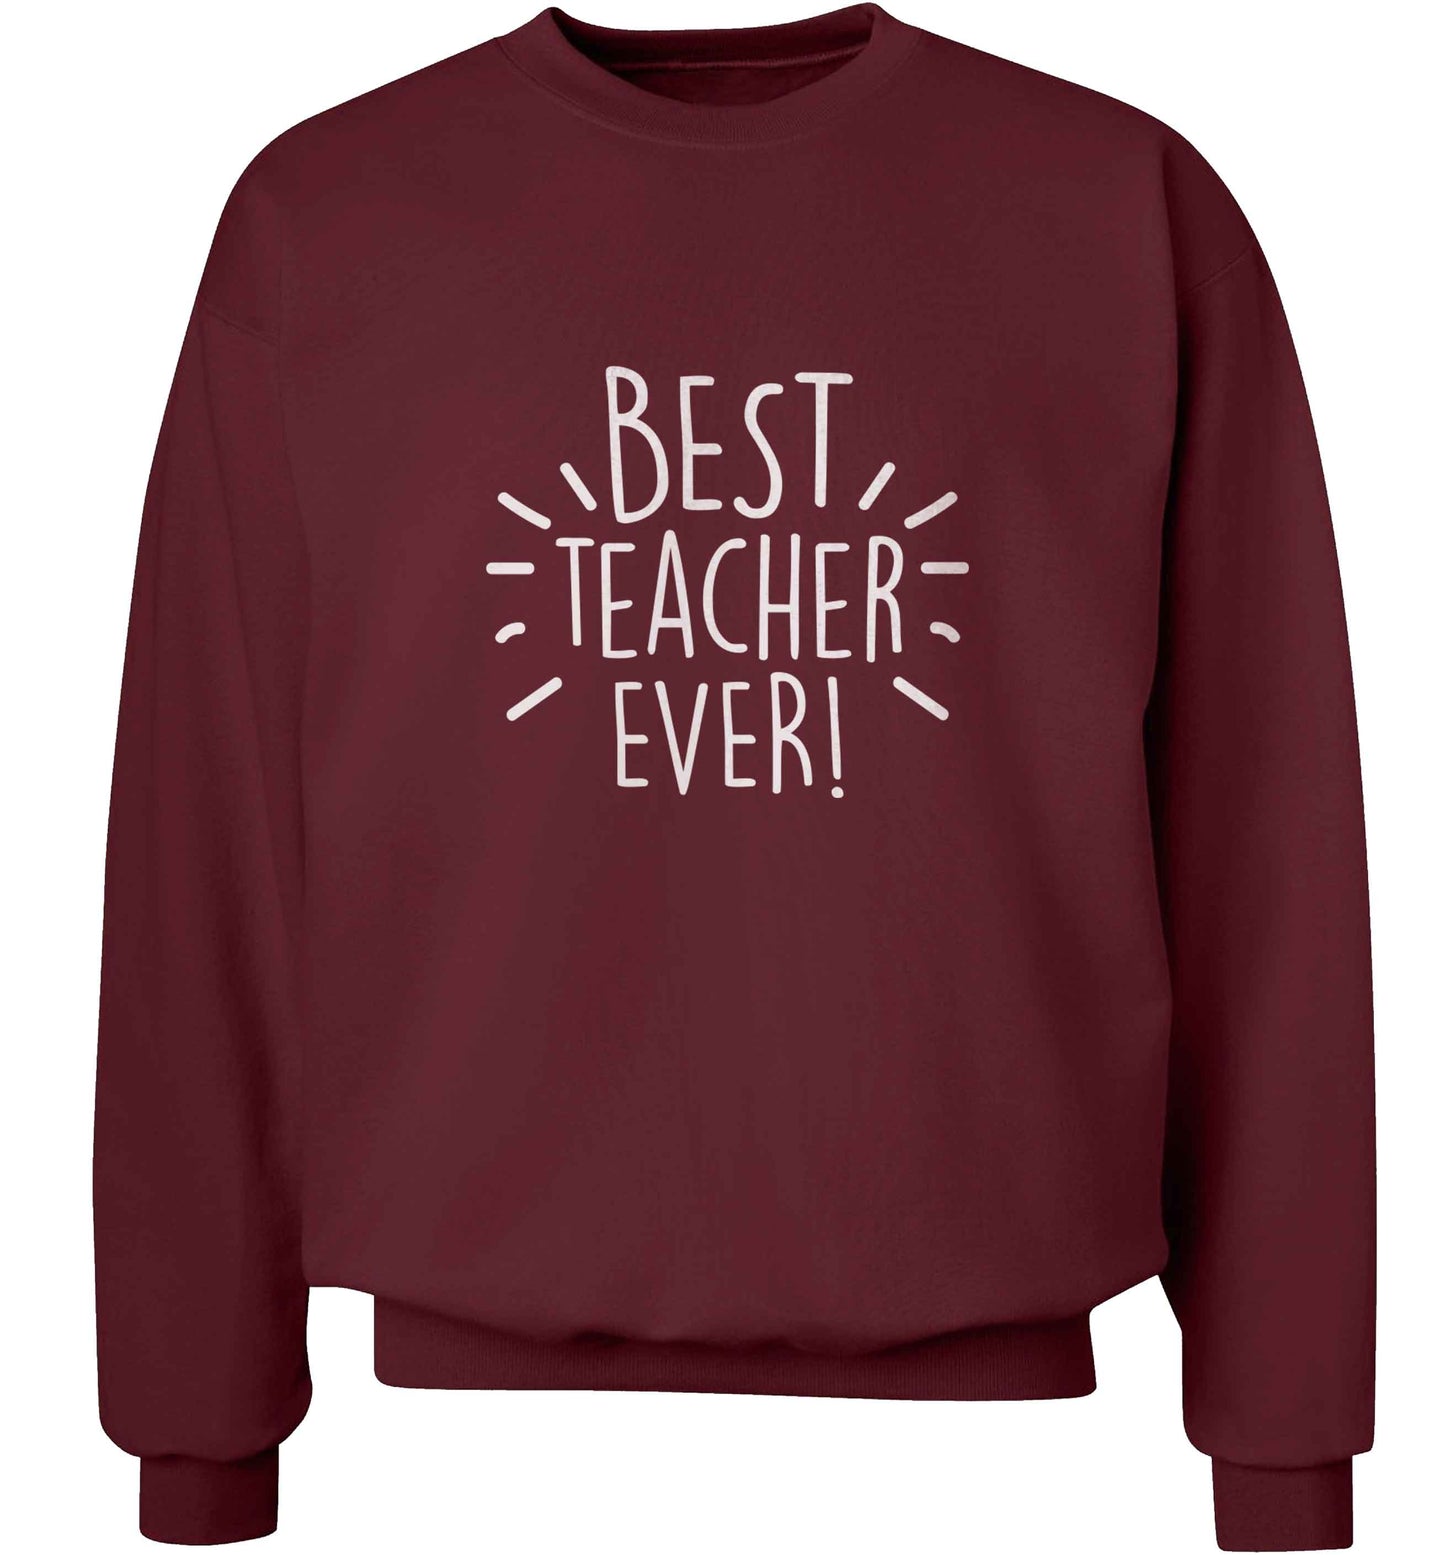 Best teacher ever! adult's unisex maroon sweater 2XL